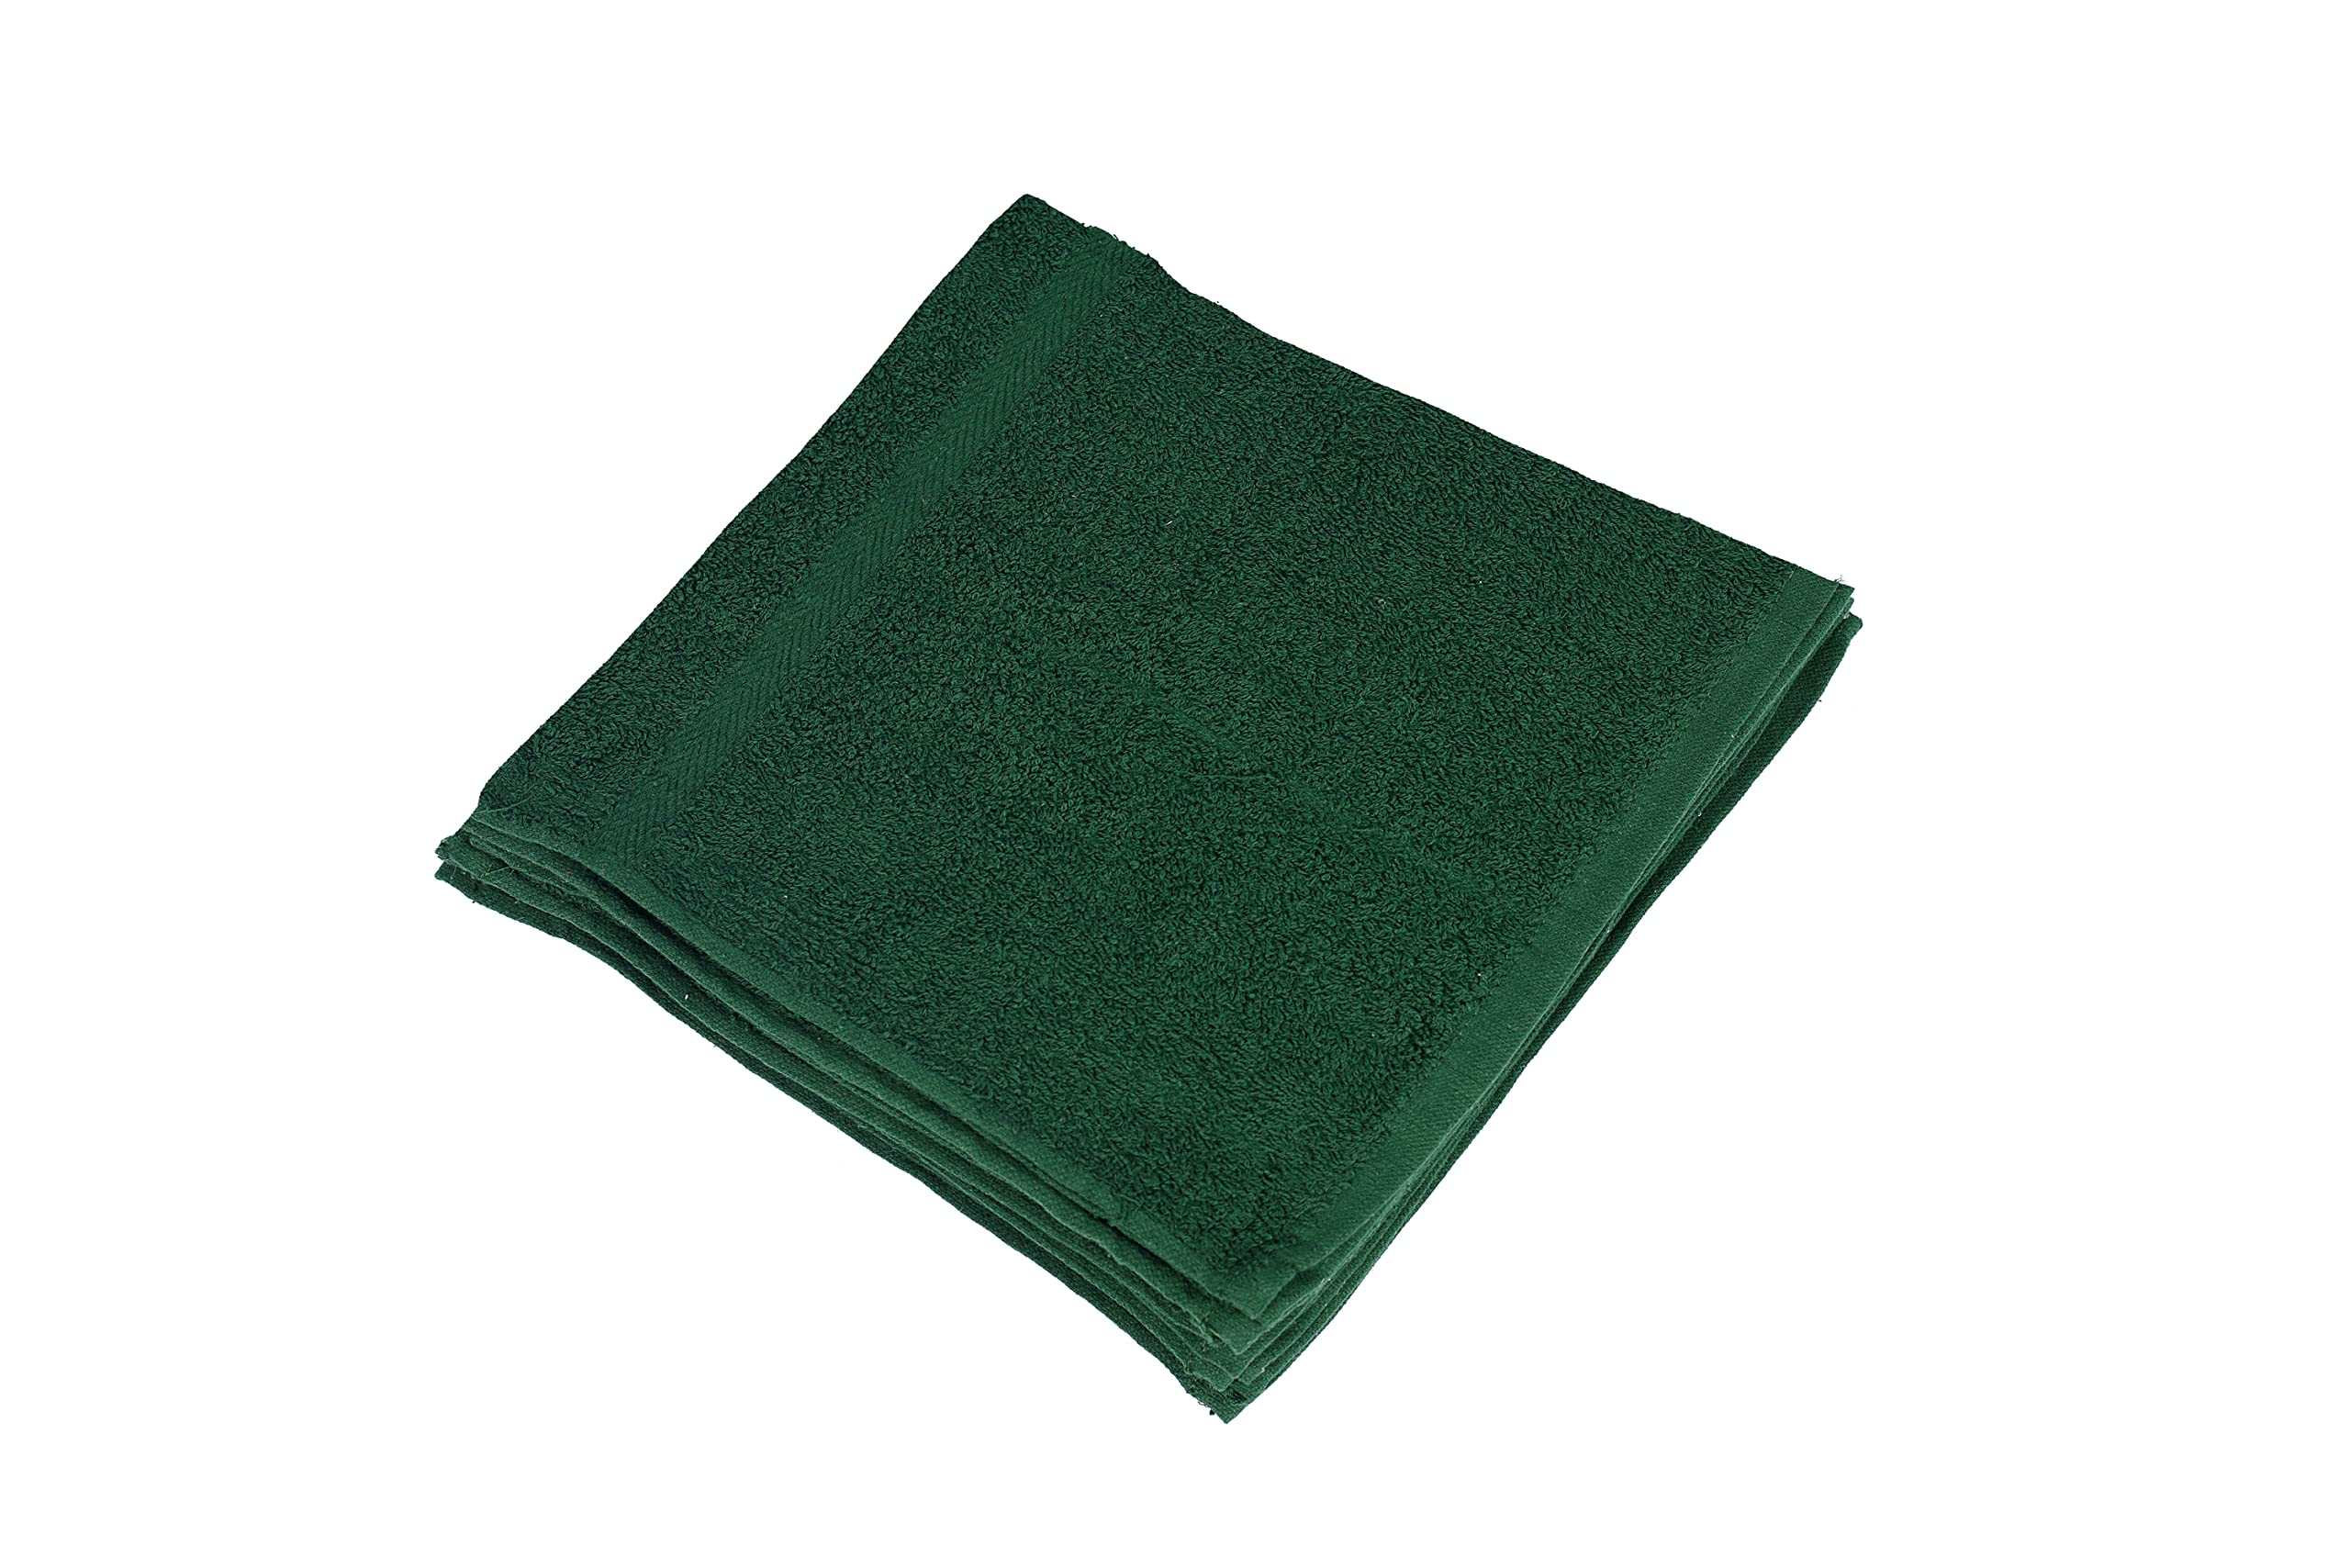  Linteum Textile 12 Piece Face Towel Set, 12x12 Inch, 100% Soft  Cotton 16 Single Ring Spun Washcloths Absorbent Durable Face Towel (Navy  Blue) : Home & Kitchen